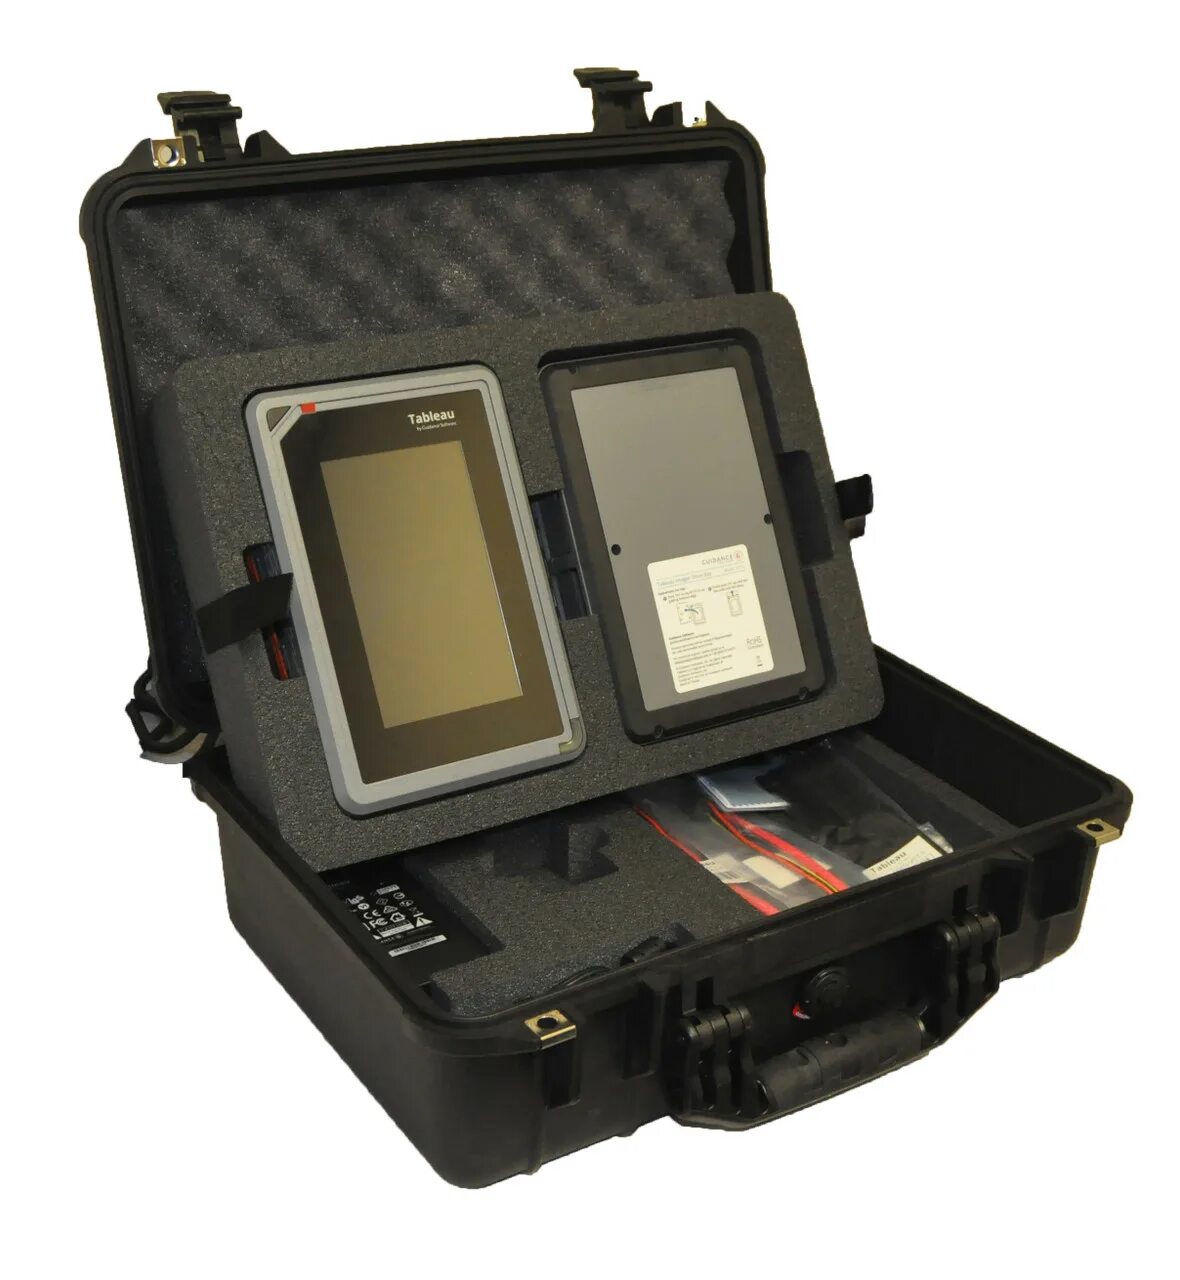 Tableau tx1 Imaging Unit 100. Tronix TX-1p. Forensic Kit. TX-1a. Максимально портативный